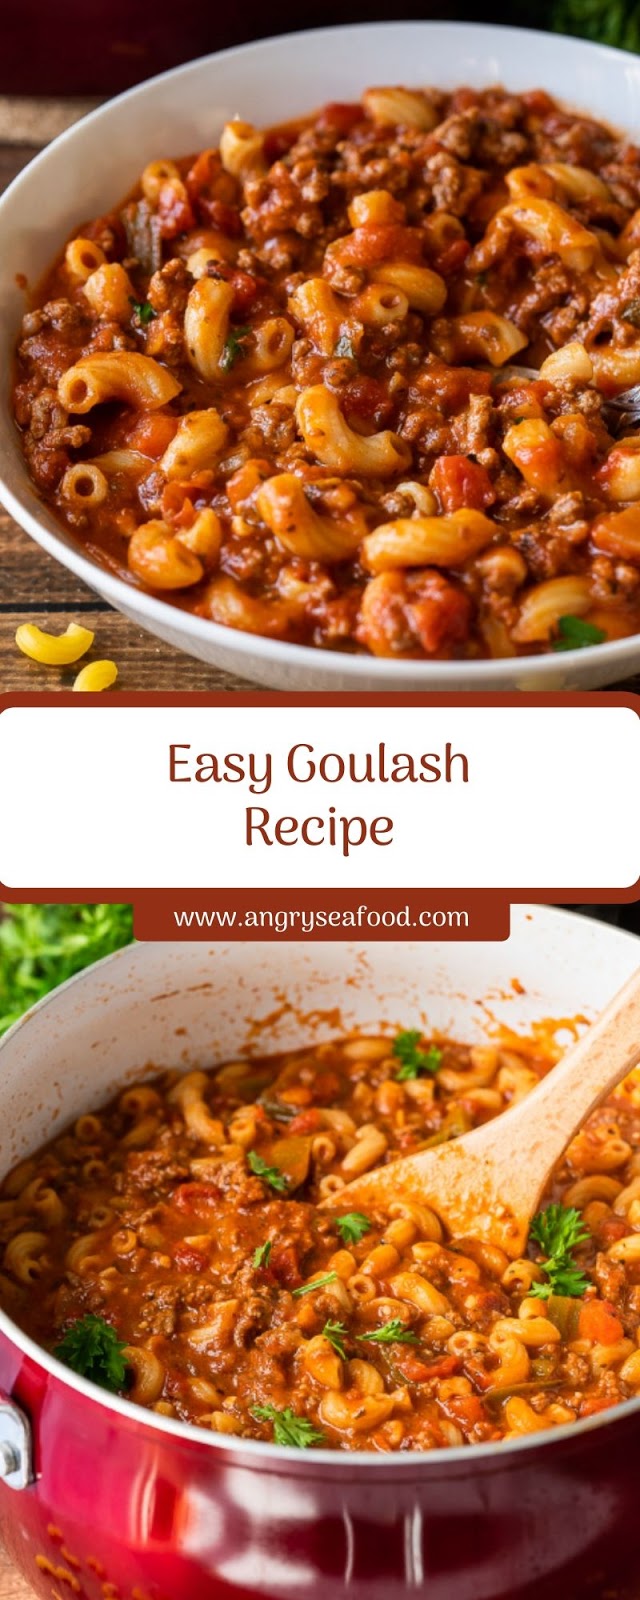 Easy Goulash Recipe